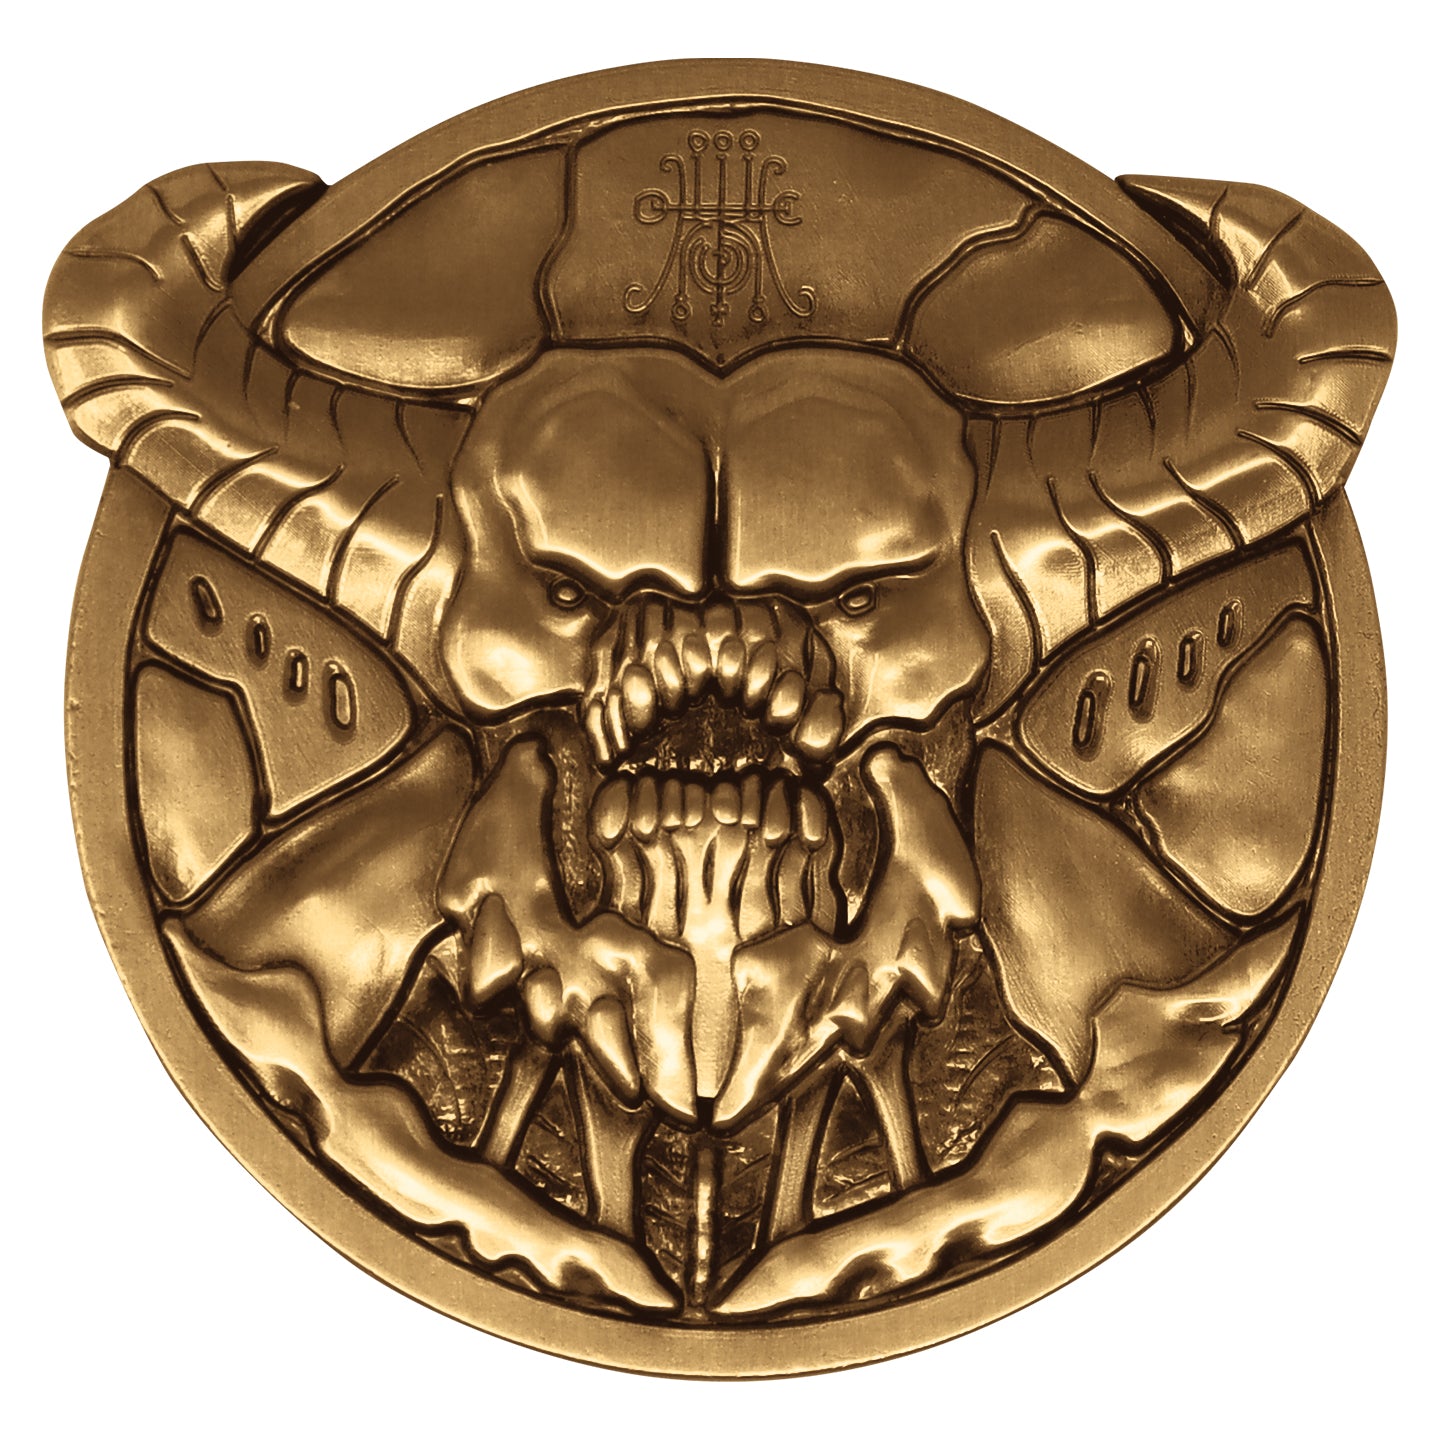 DOOM Limited Edition Baron of Hell Medallion